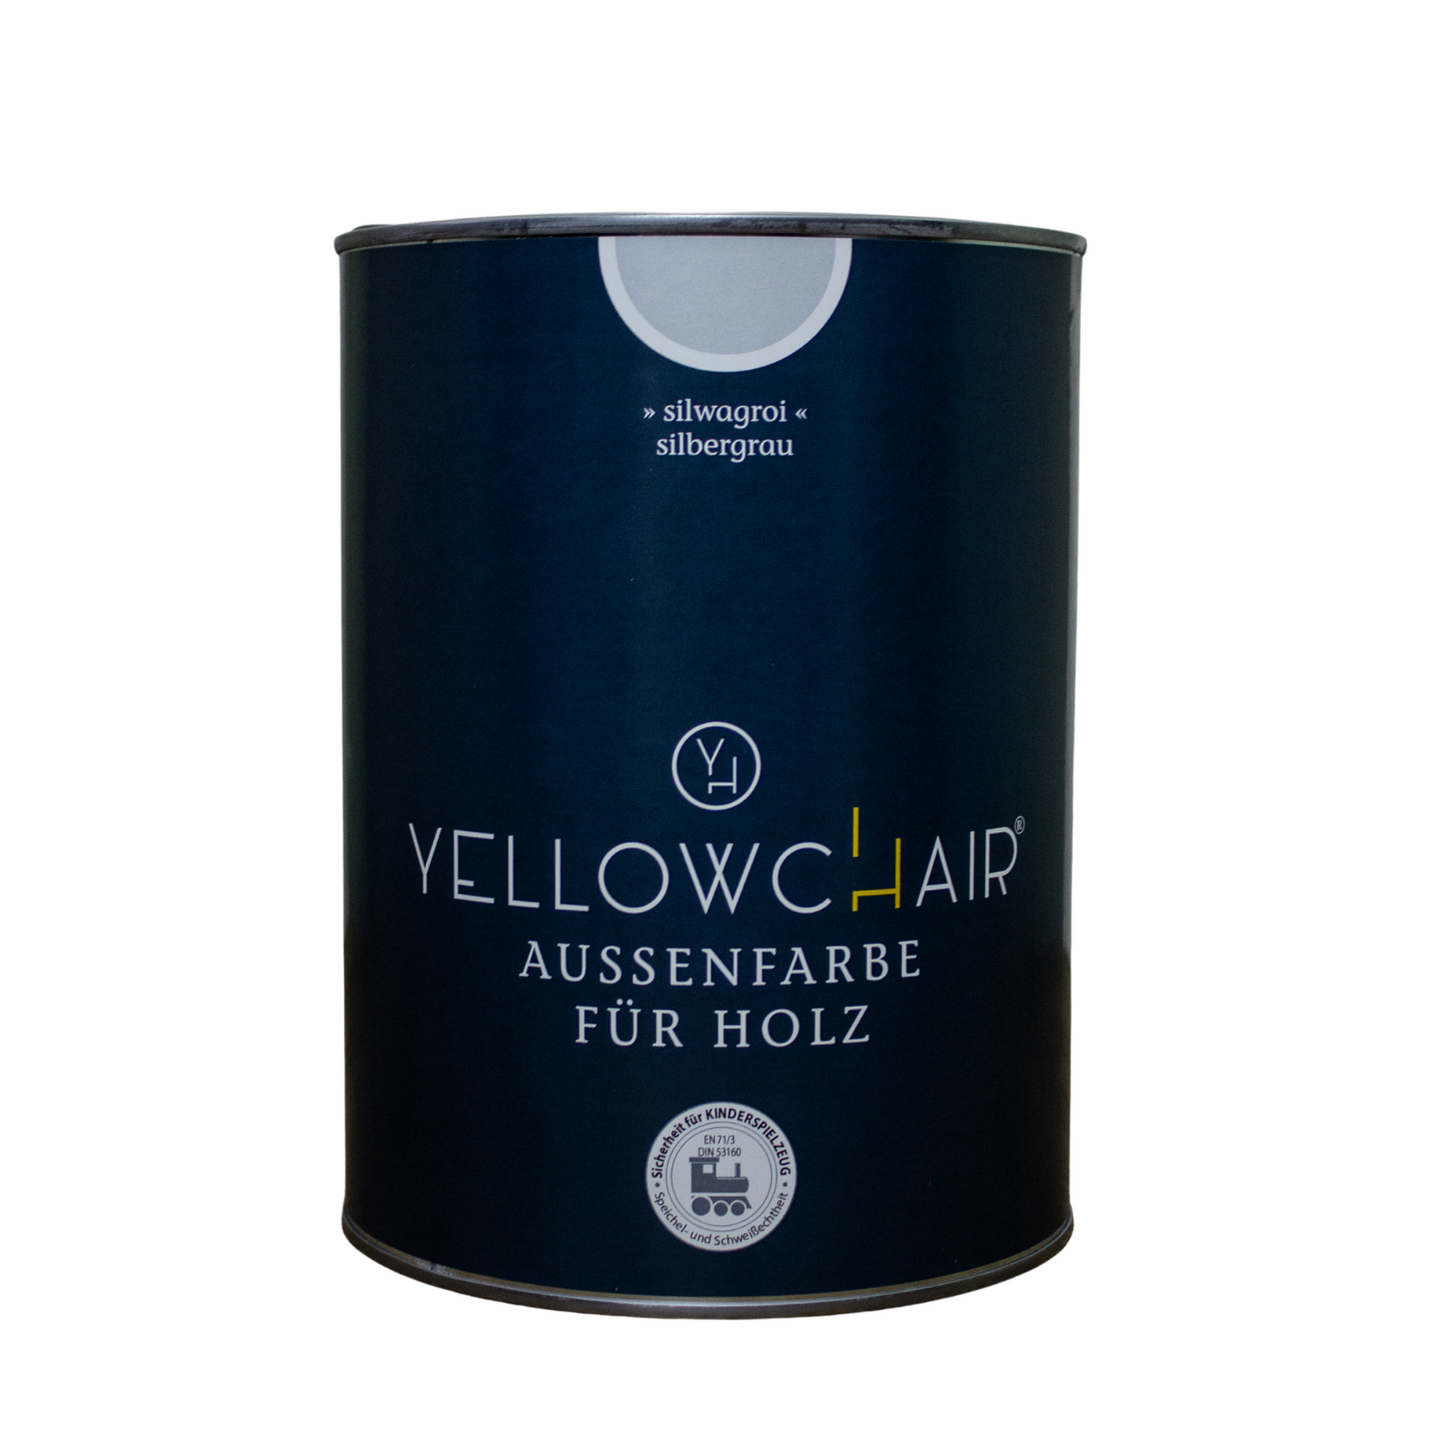 yellowchair Aussenfarbe für Holz Silwagroi / Silbergrau